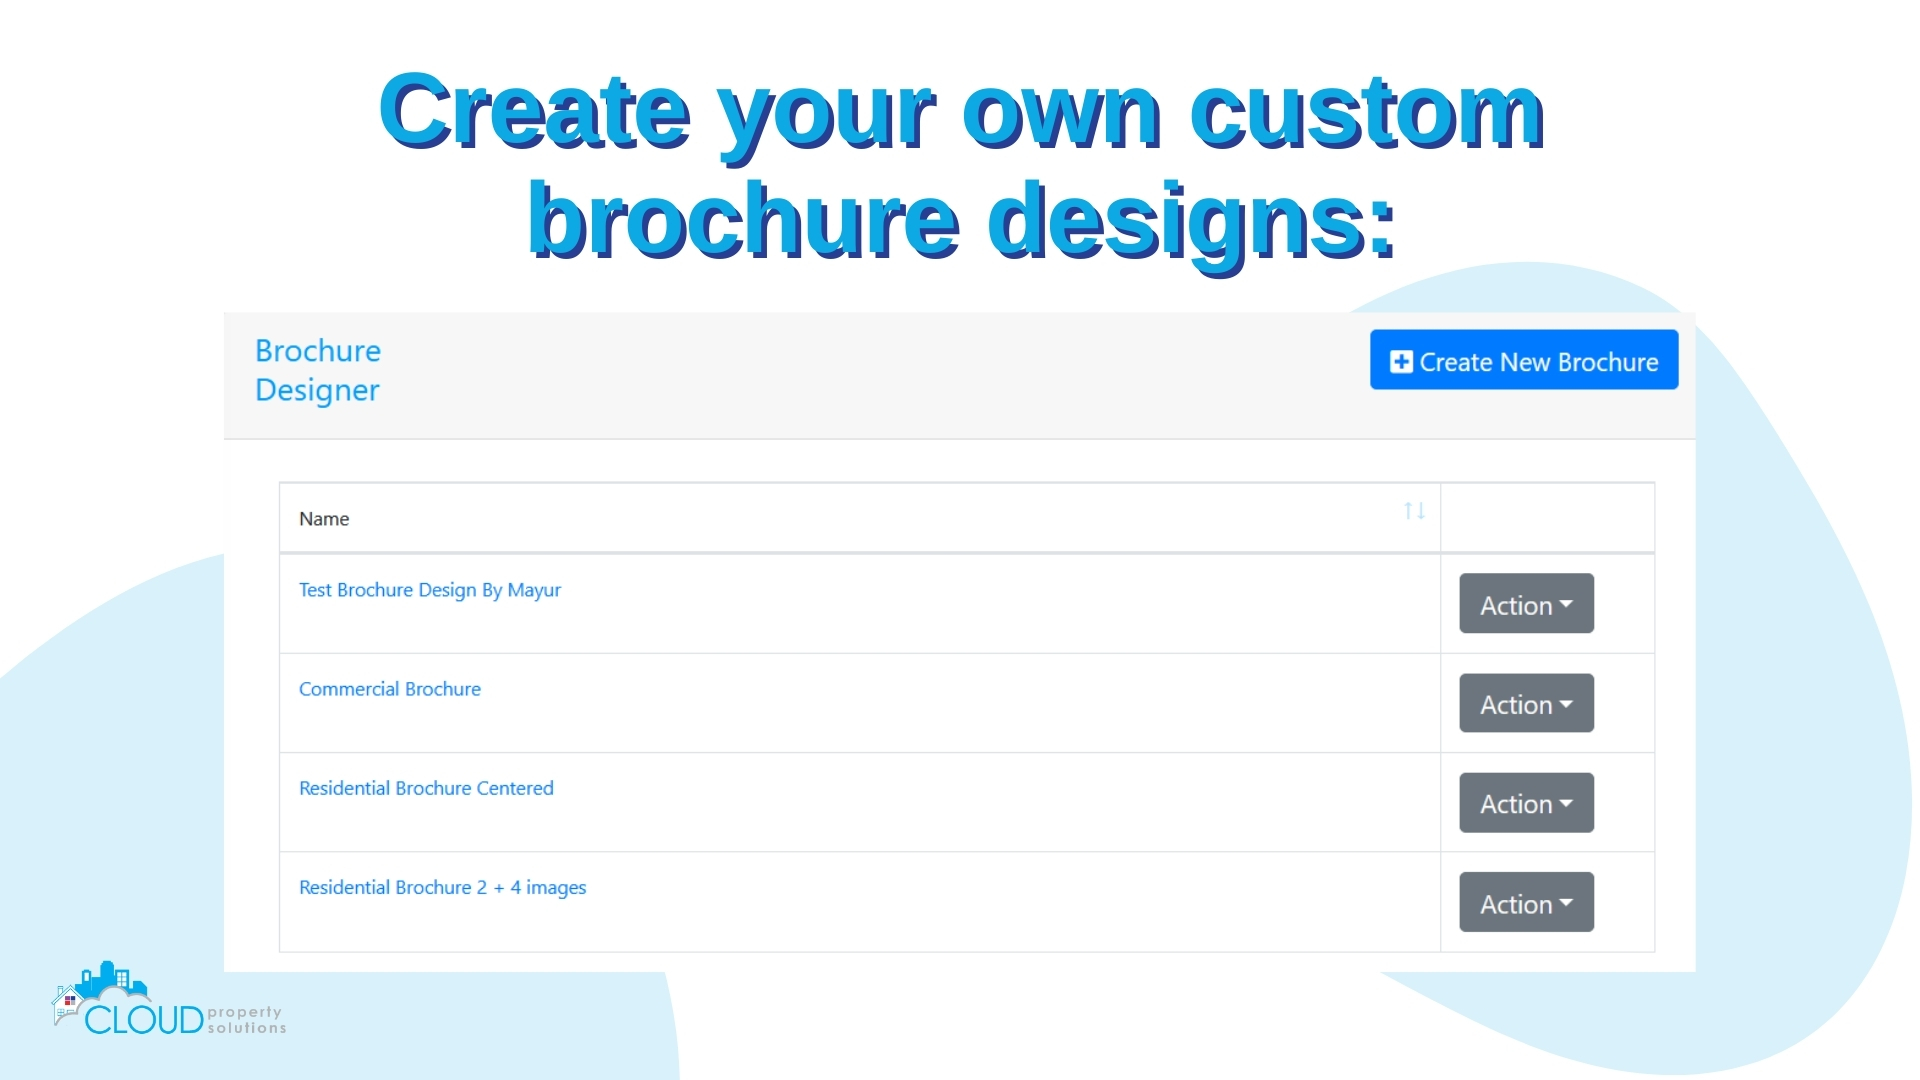 Create your own custom brochure designs.